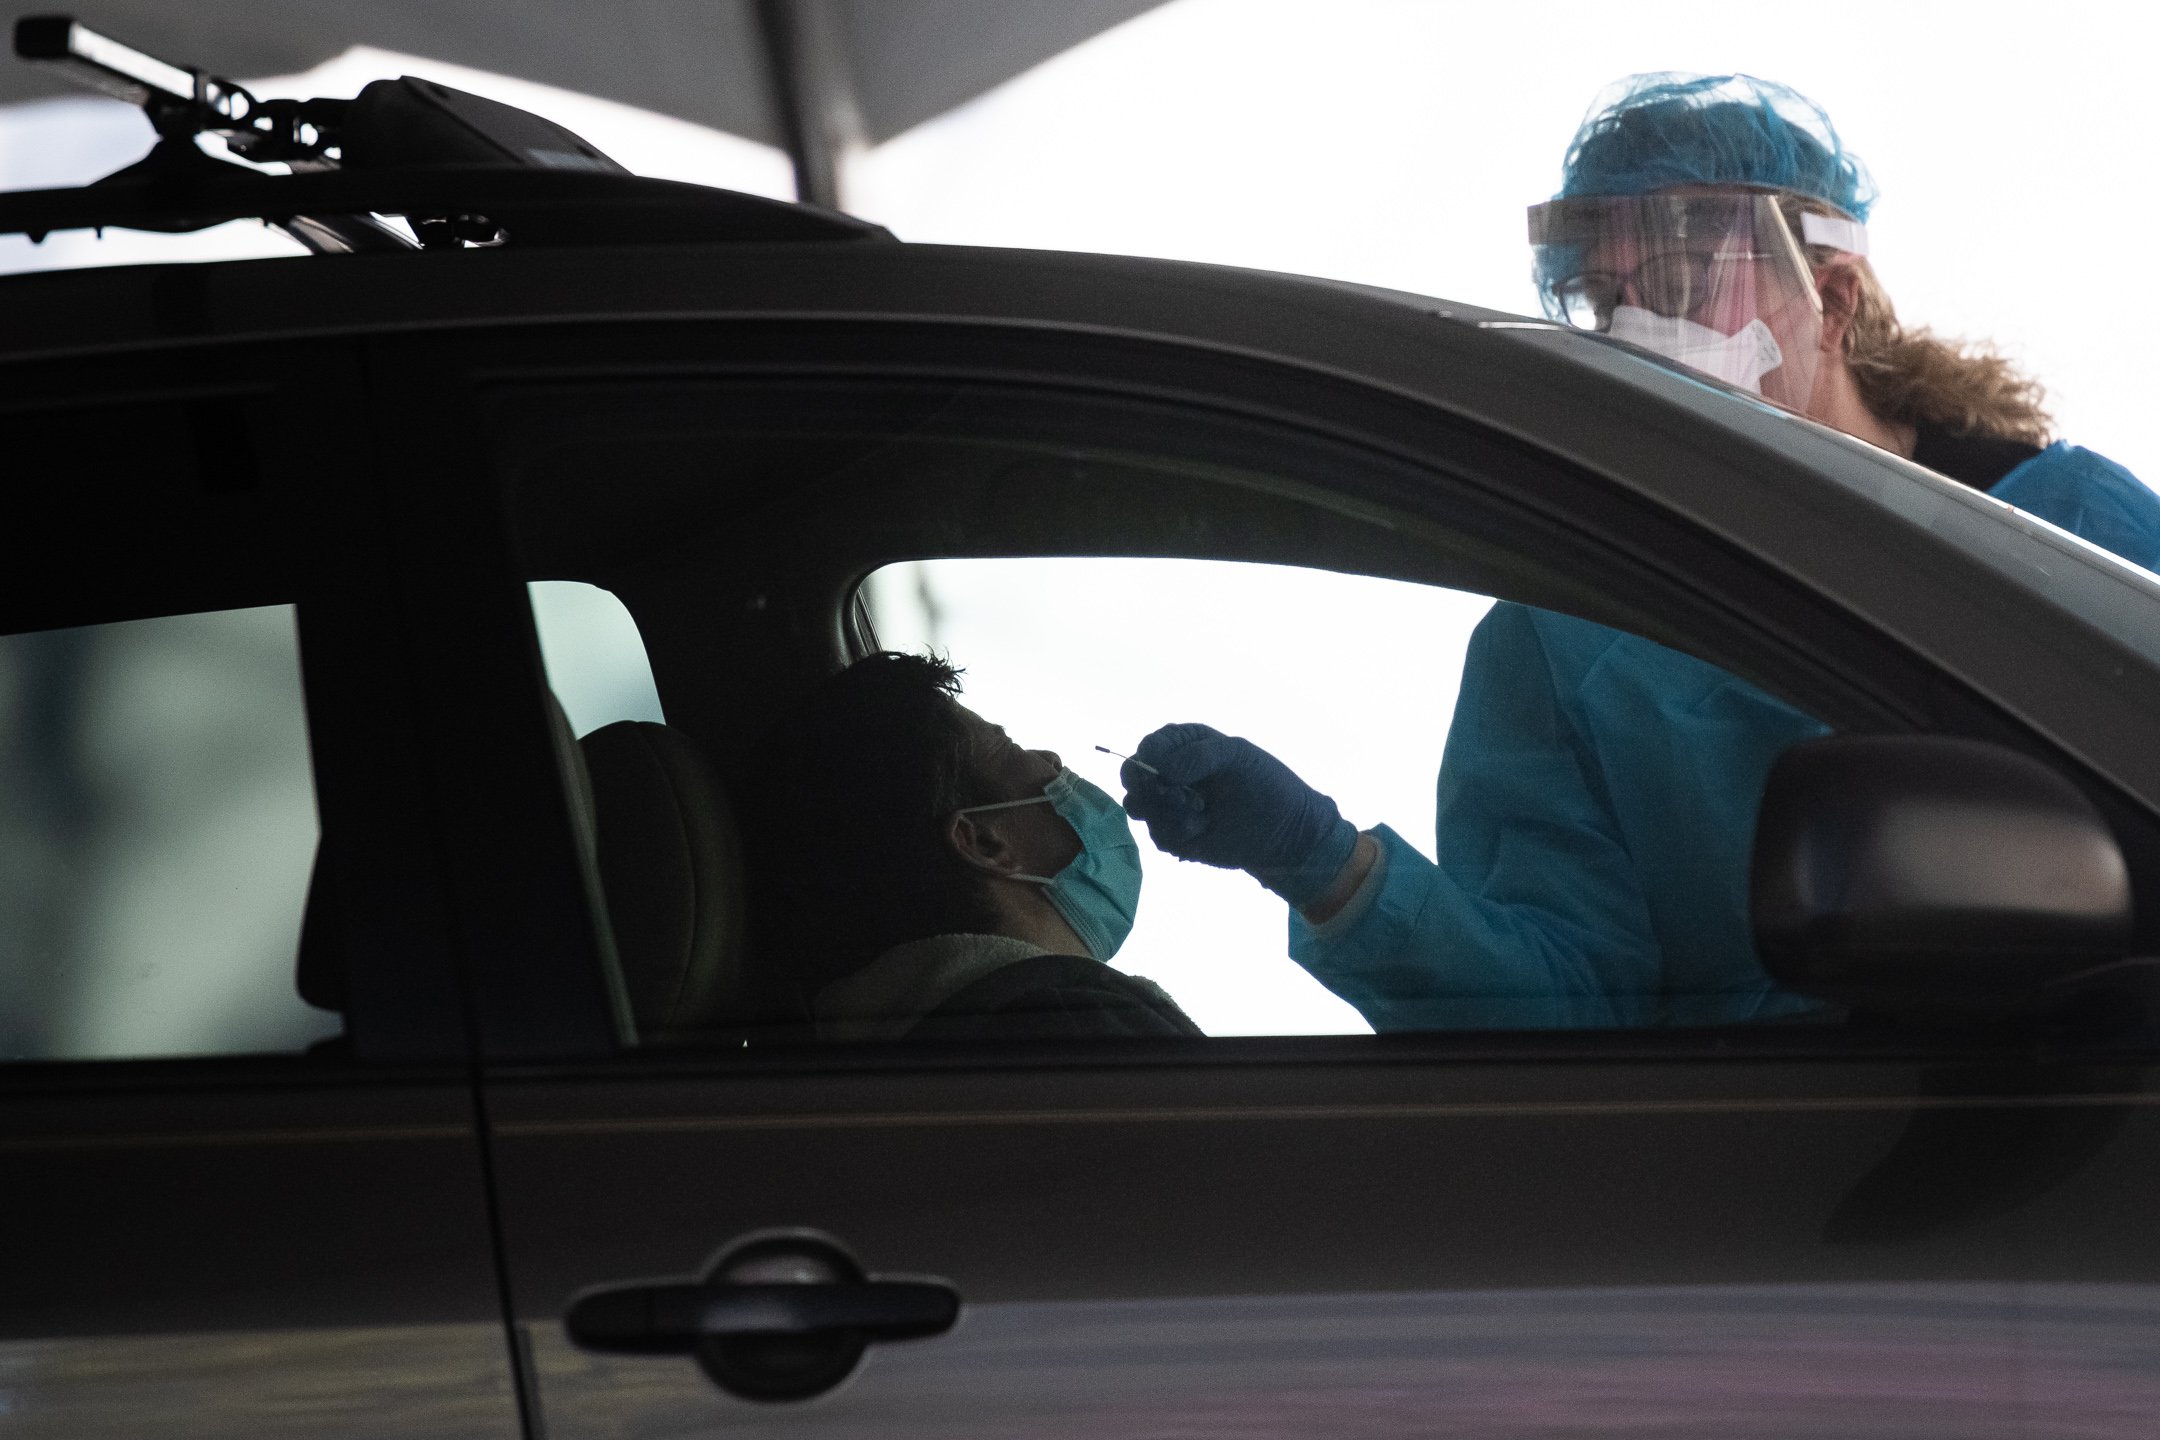  A healthcare worker takes a nasal test swab of an individual at a drive-thru COVID-19 testing facility amid the coronavirus pandemic, at George Washington University, in Washington, D.C., on April 6, 2020. (Graeme Sloan/Sipa USA) 